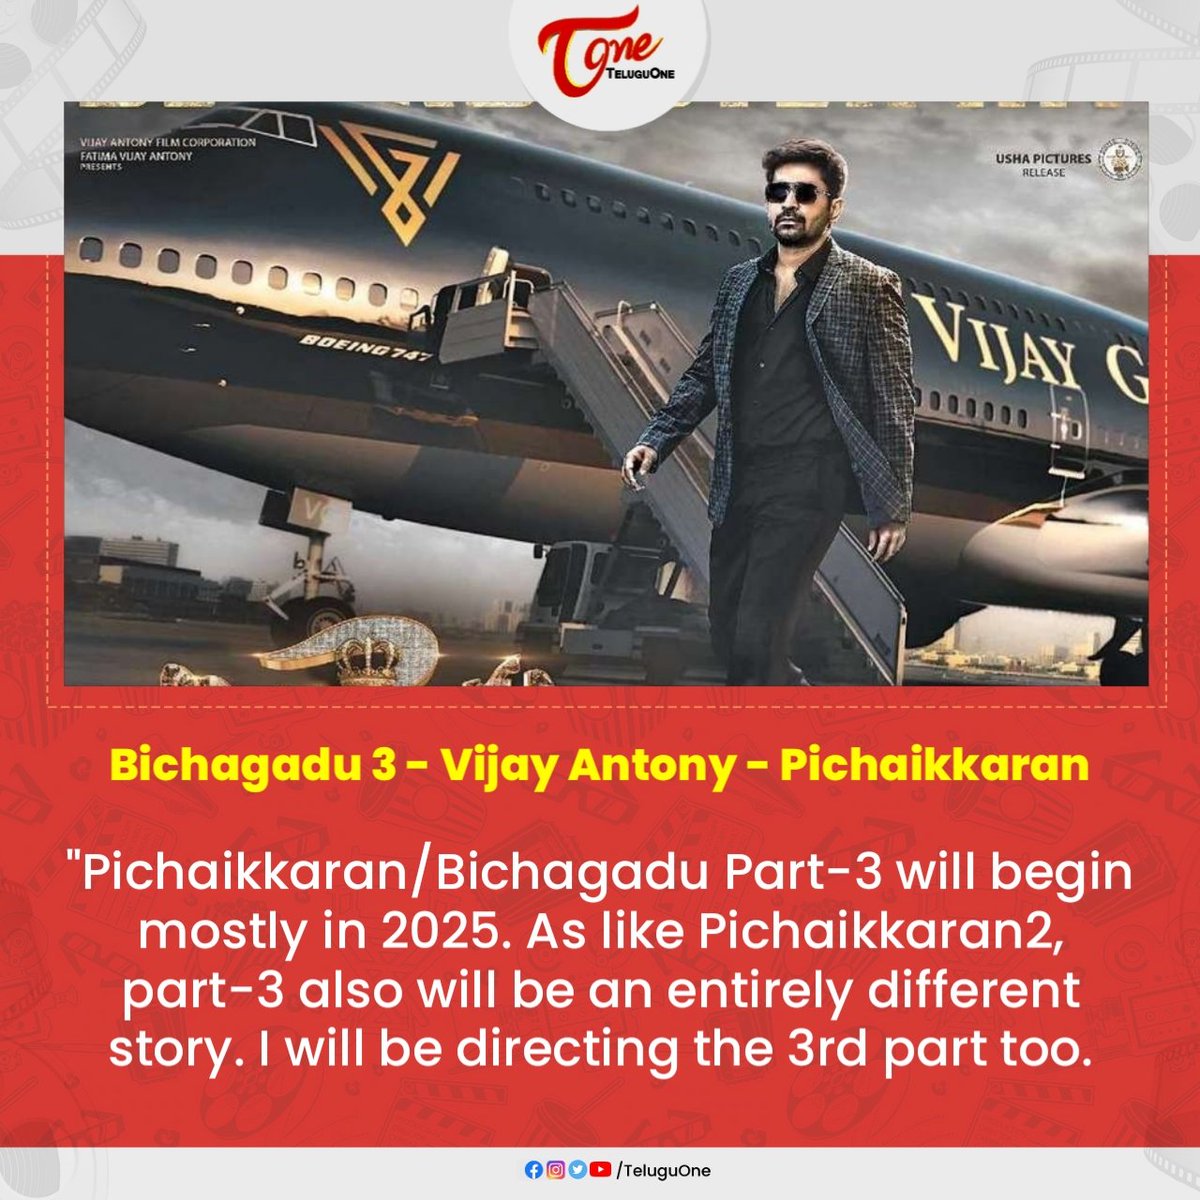 #VijayAntony confirmed #Bichagadu3 in 2025

#Bichagadu2 #Pichaikaaran2